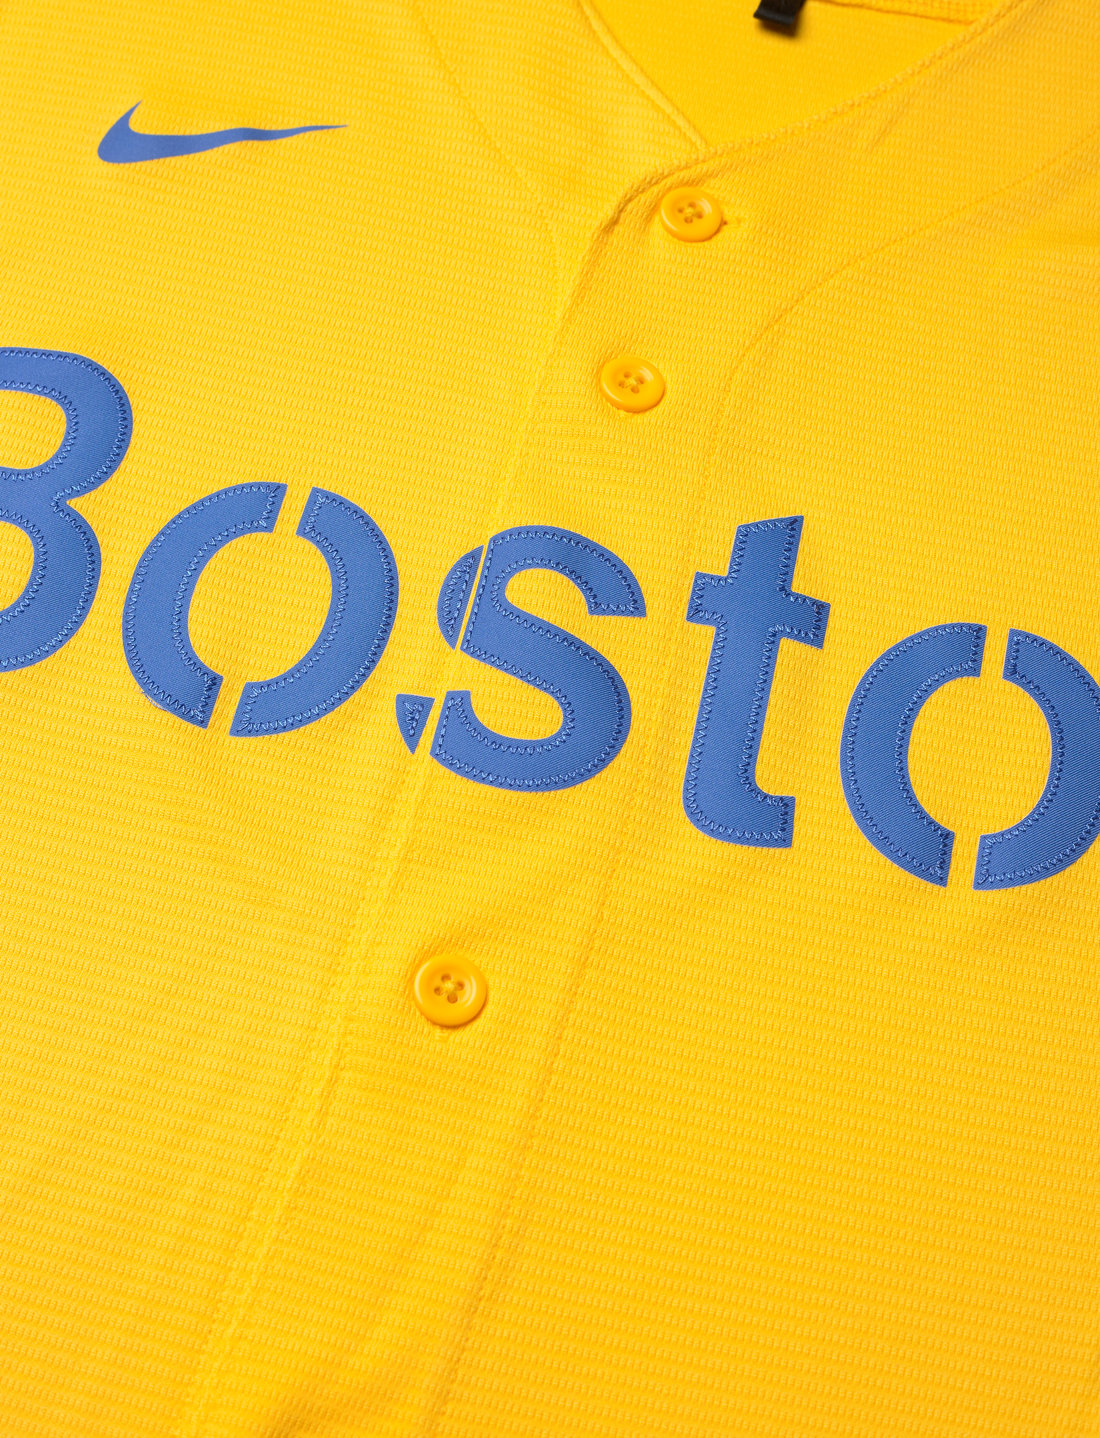 mlb boston red sox city connect men's replica baseball jersey